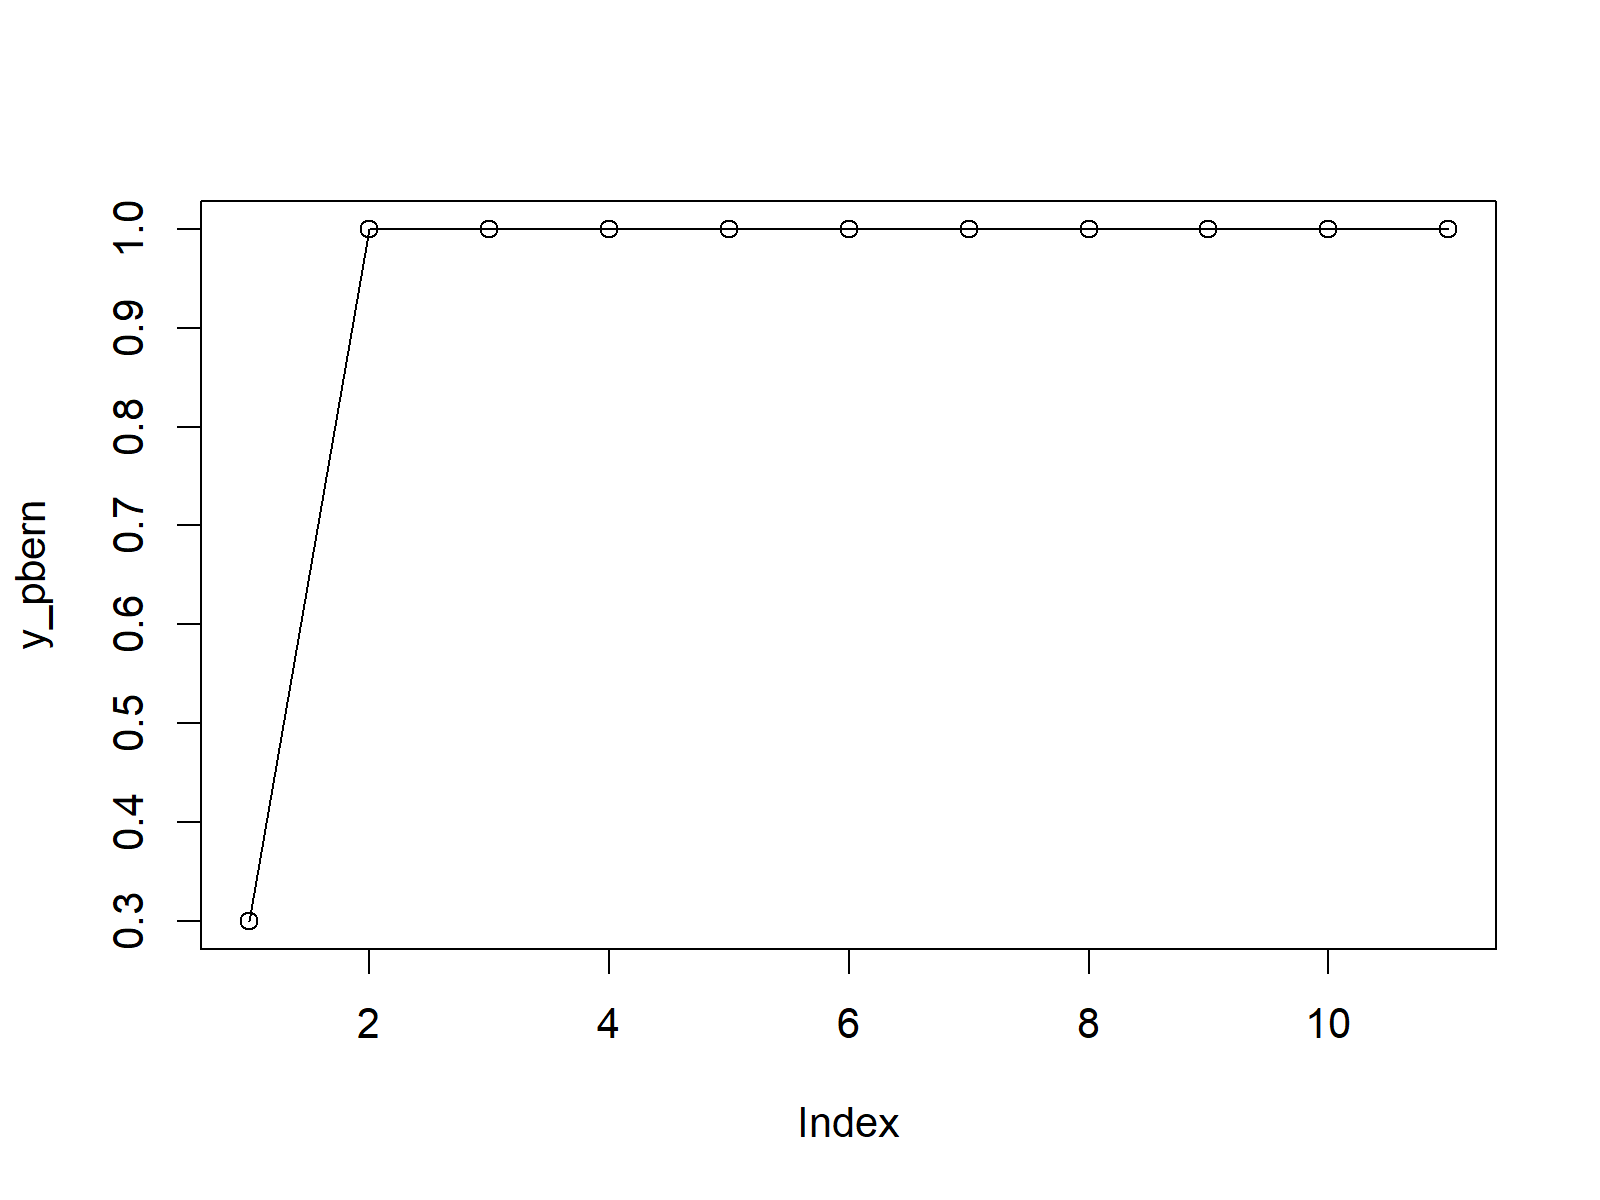 Bernoulli cumulative distribution function plot in R